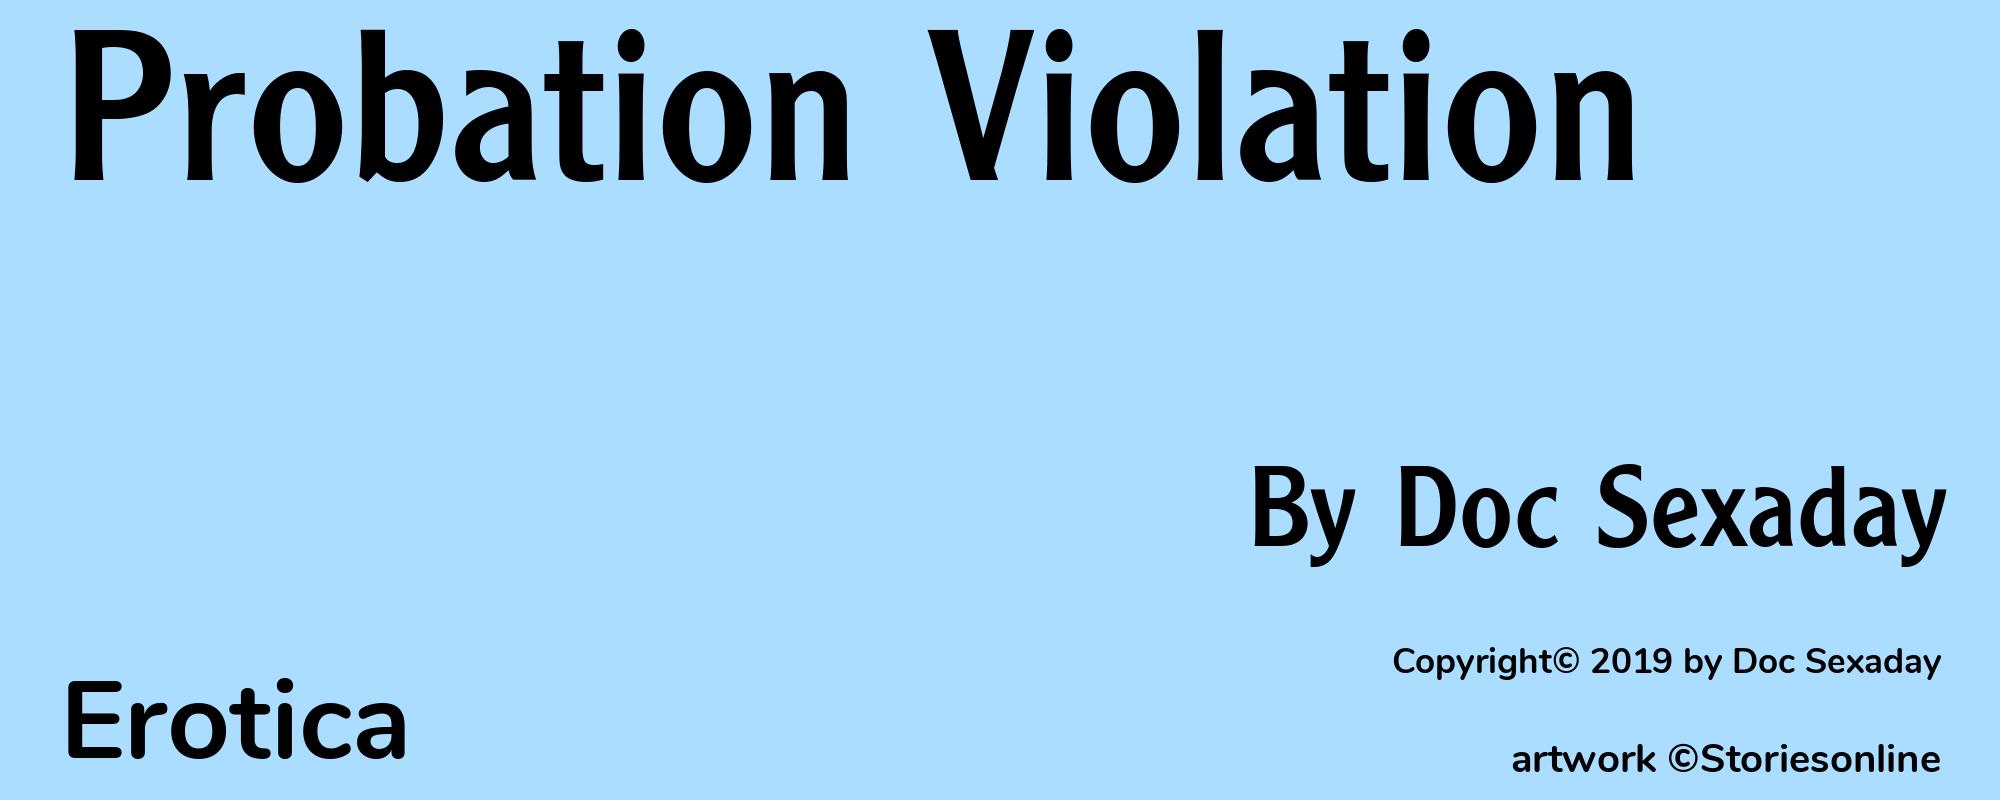 Probation Violation - Cover